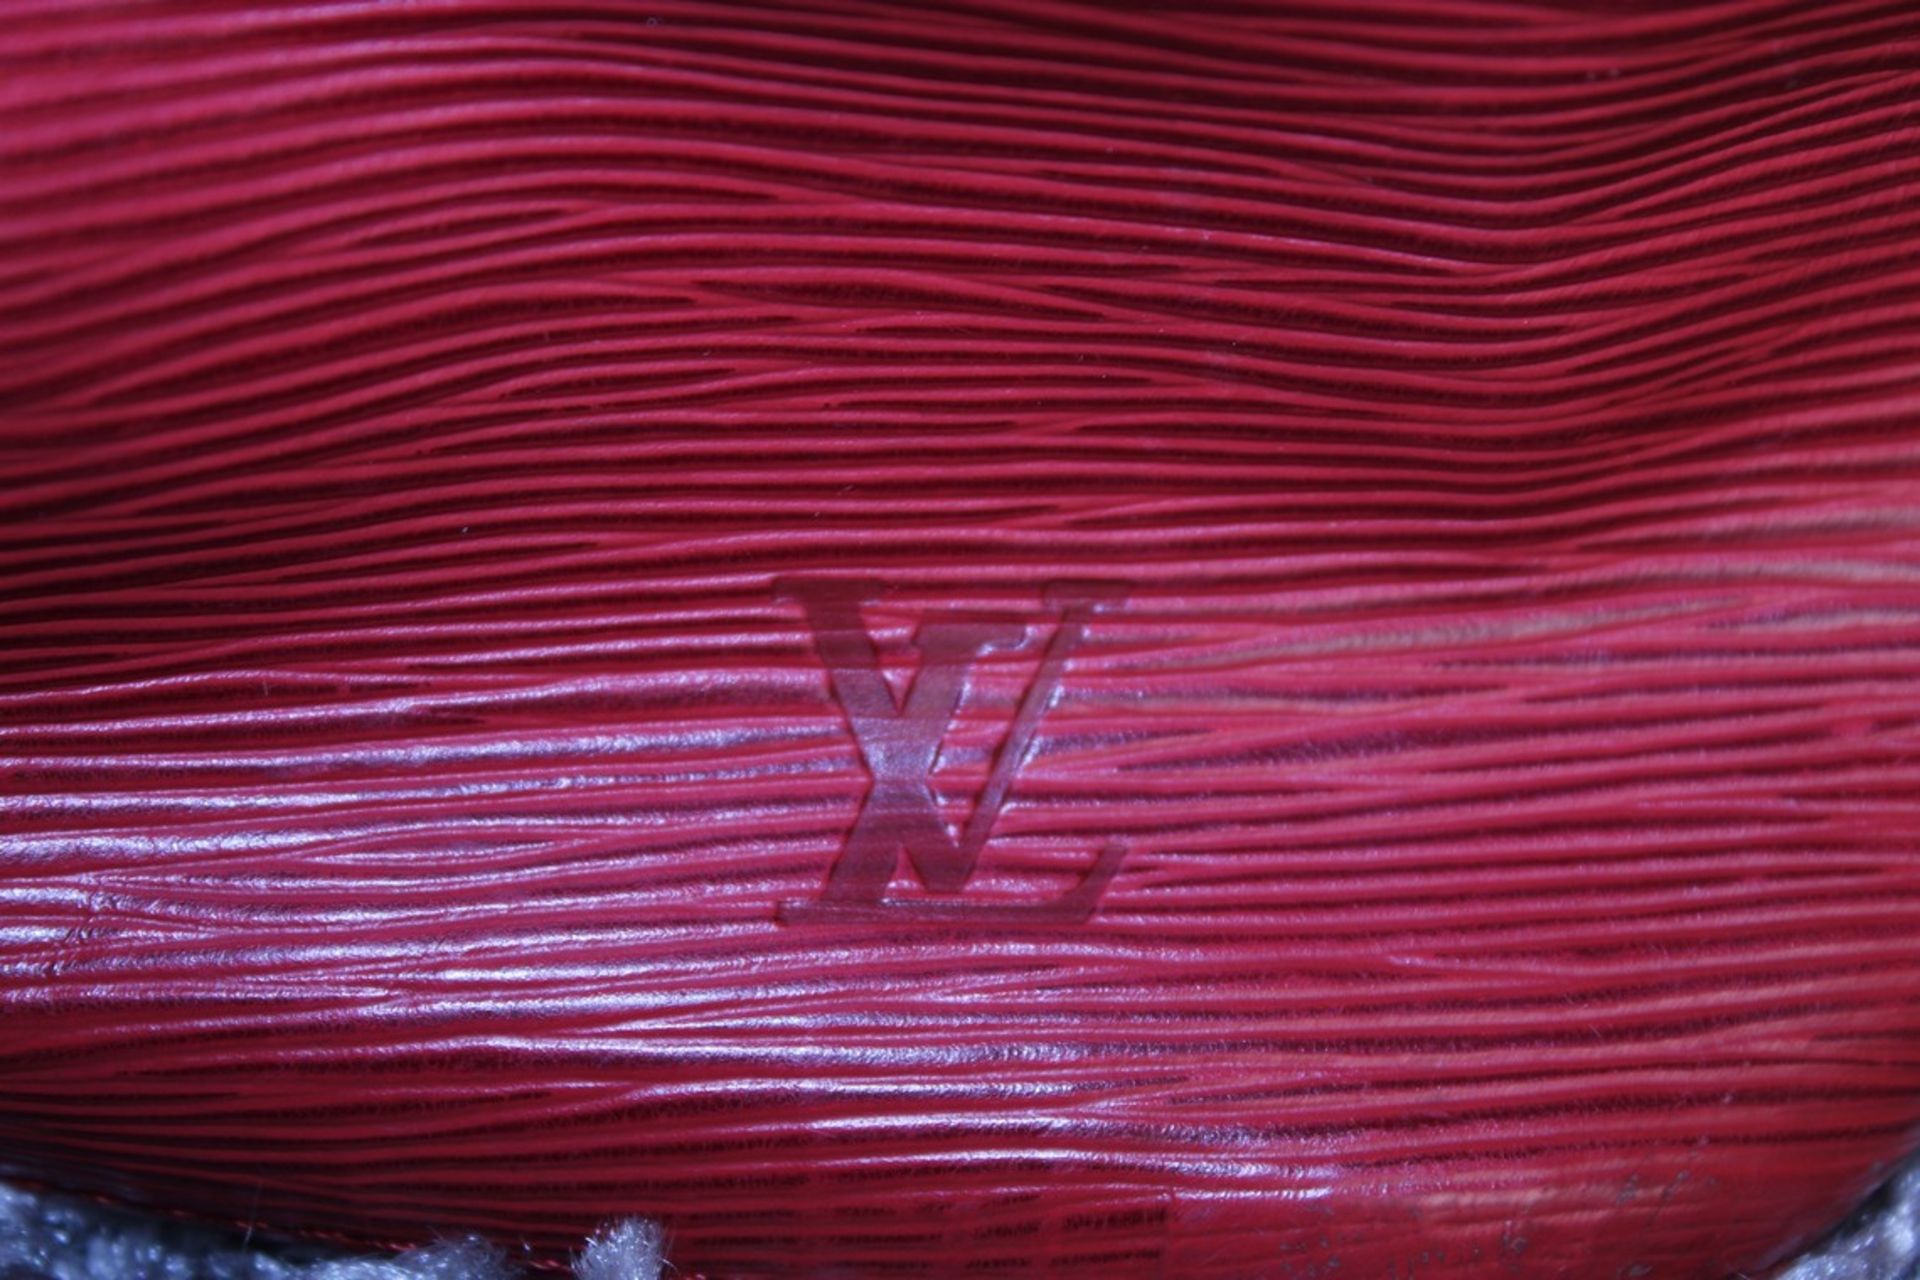 Rrp £925 Louis Vuitton Noe Shoulder Bag - Image 2 of 3